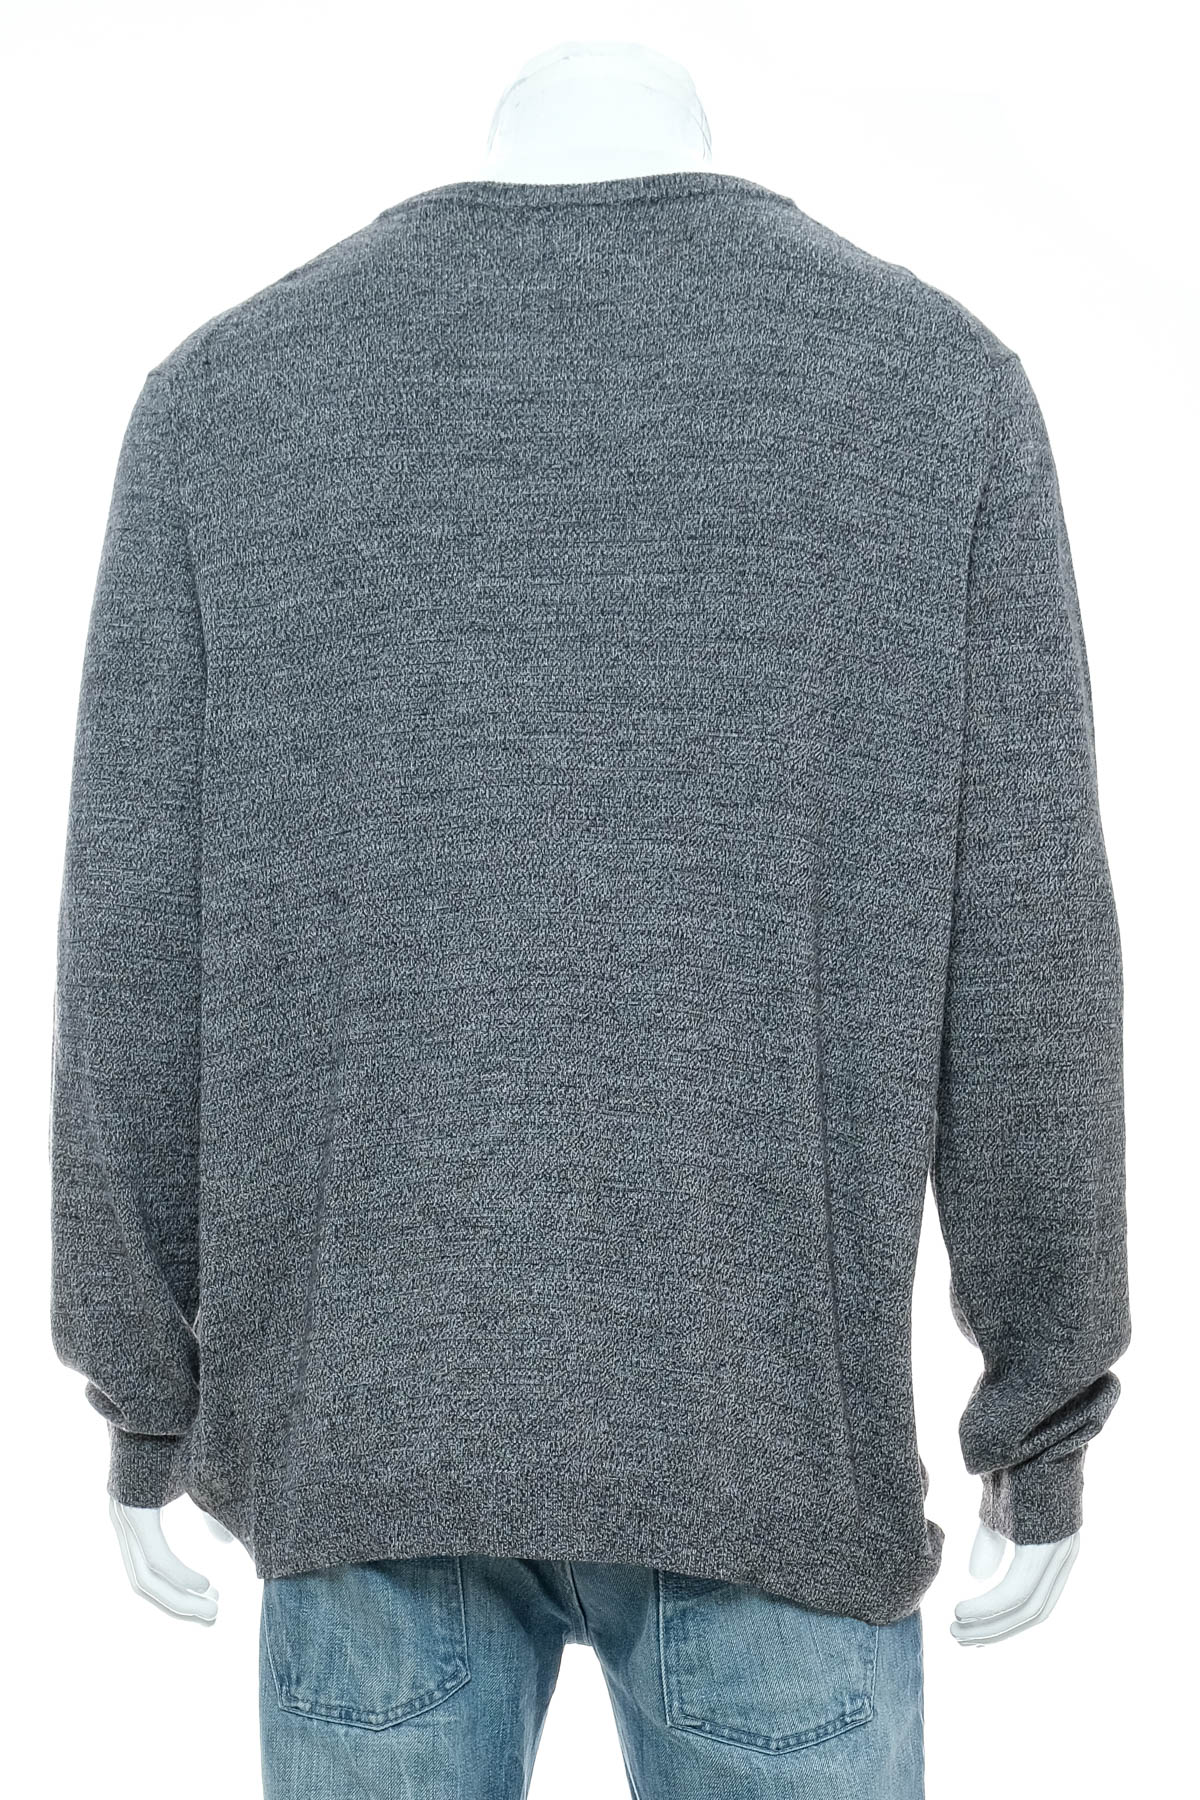 Men's sweater - APT. 9 - 1